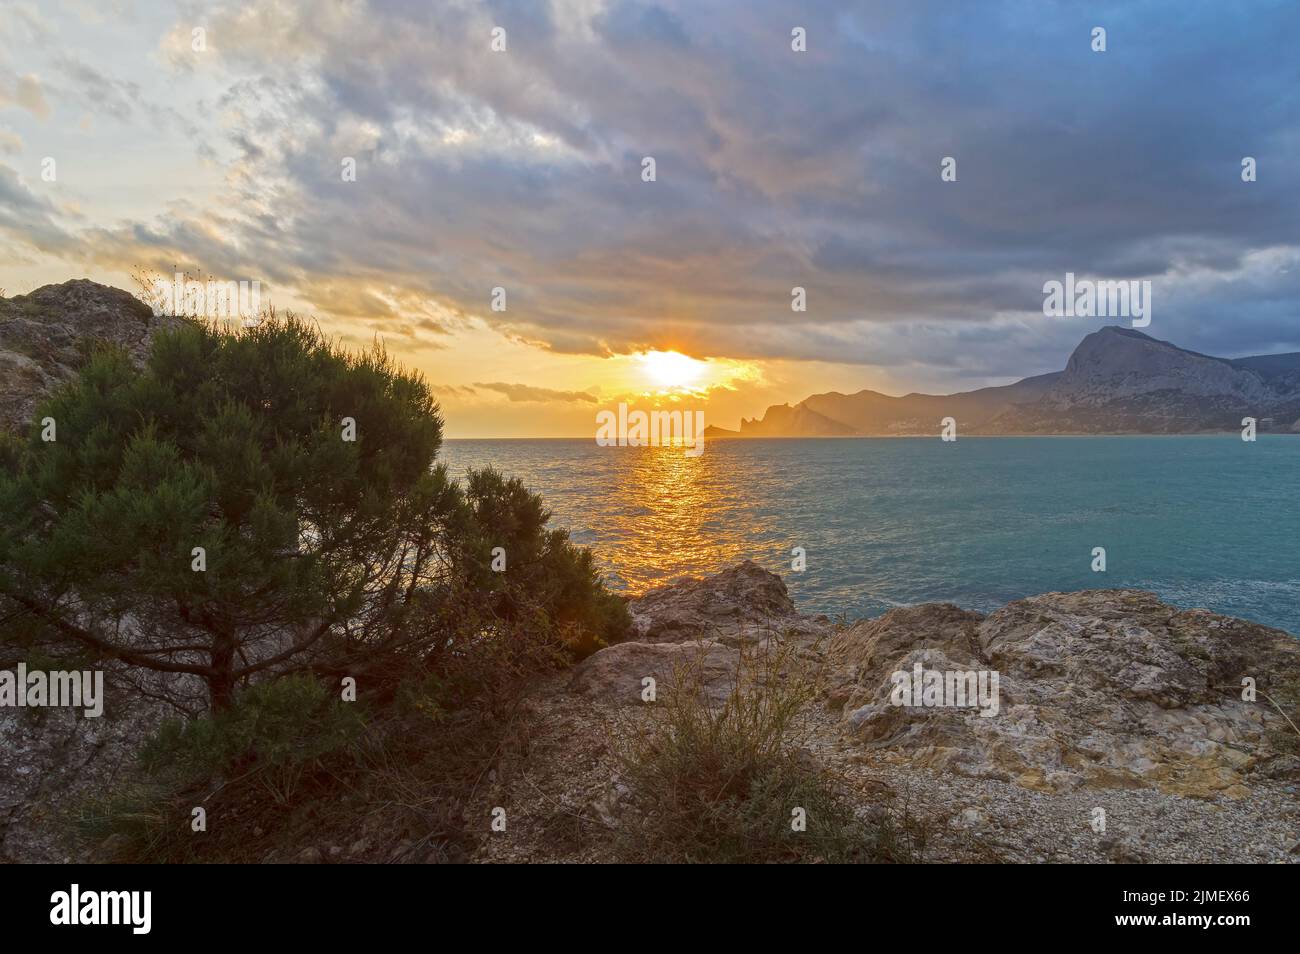 Sunset over the Black Sea. Stock Photo